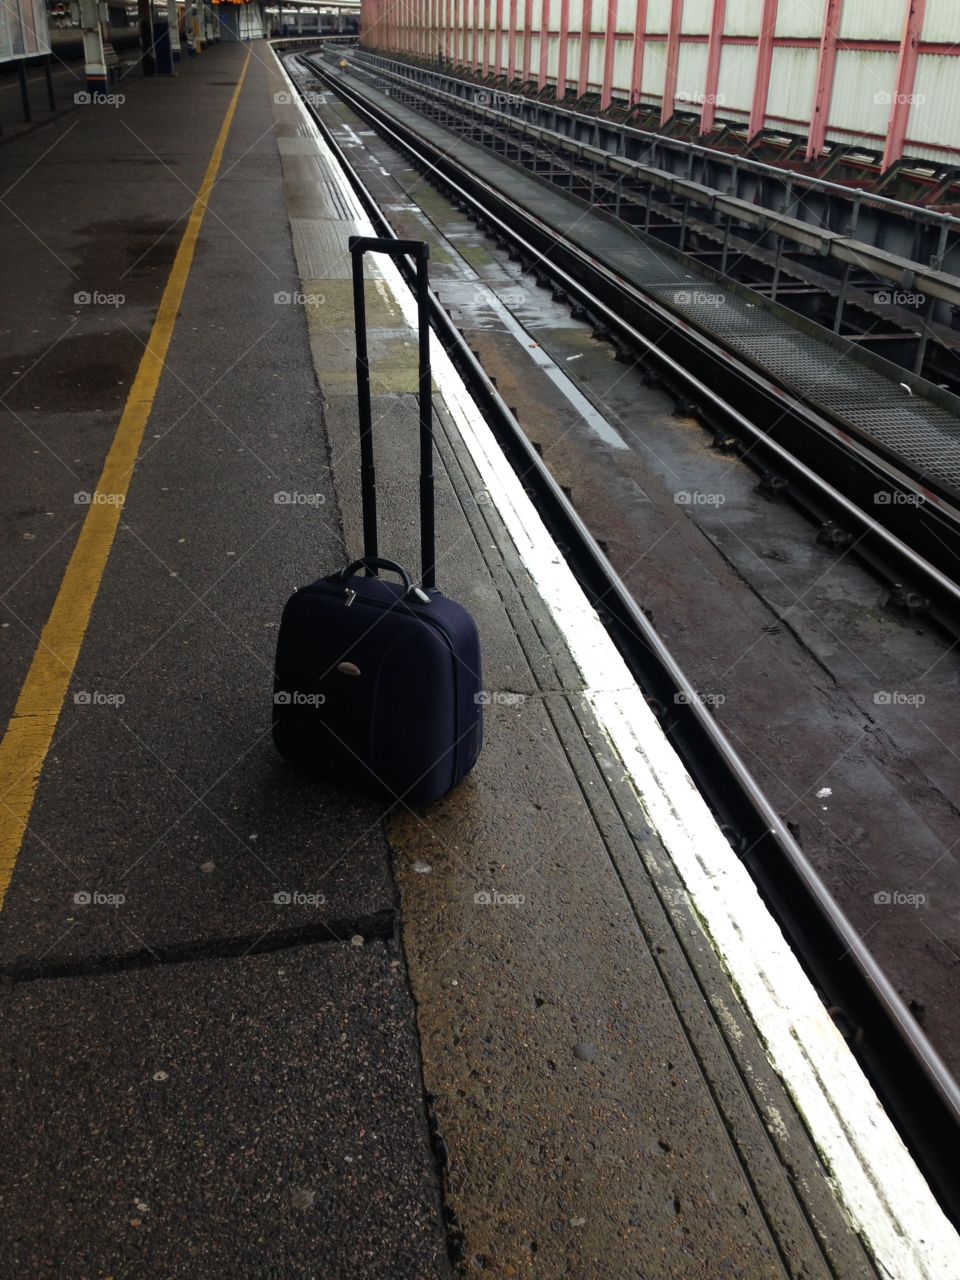 Suitcase on empty train platform 